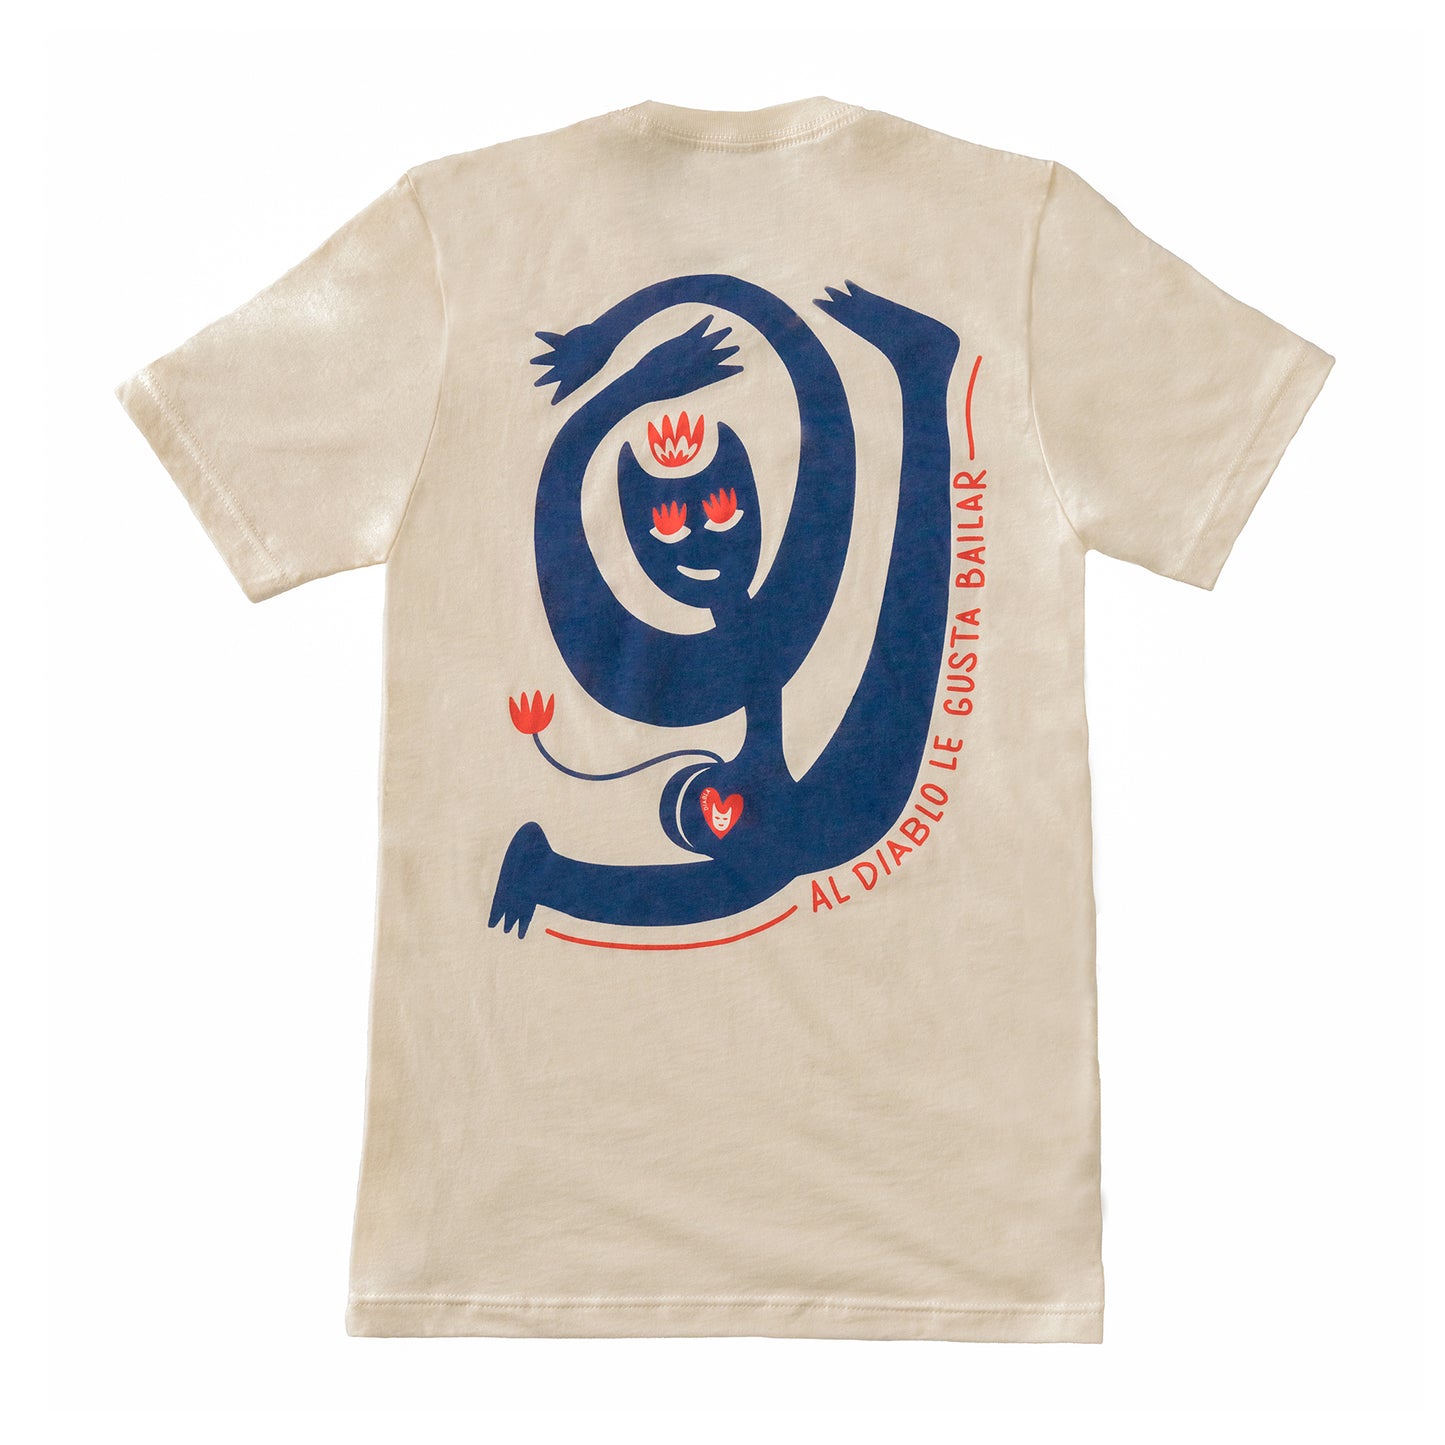 Image of back side of t-shirt. design printed is a blue devil with red details. copy says "al diablo le gusta bailar"